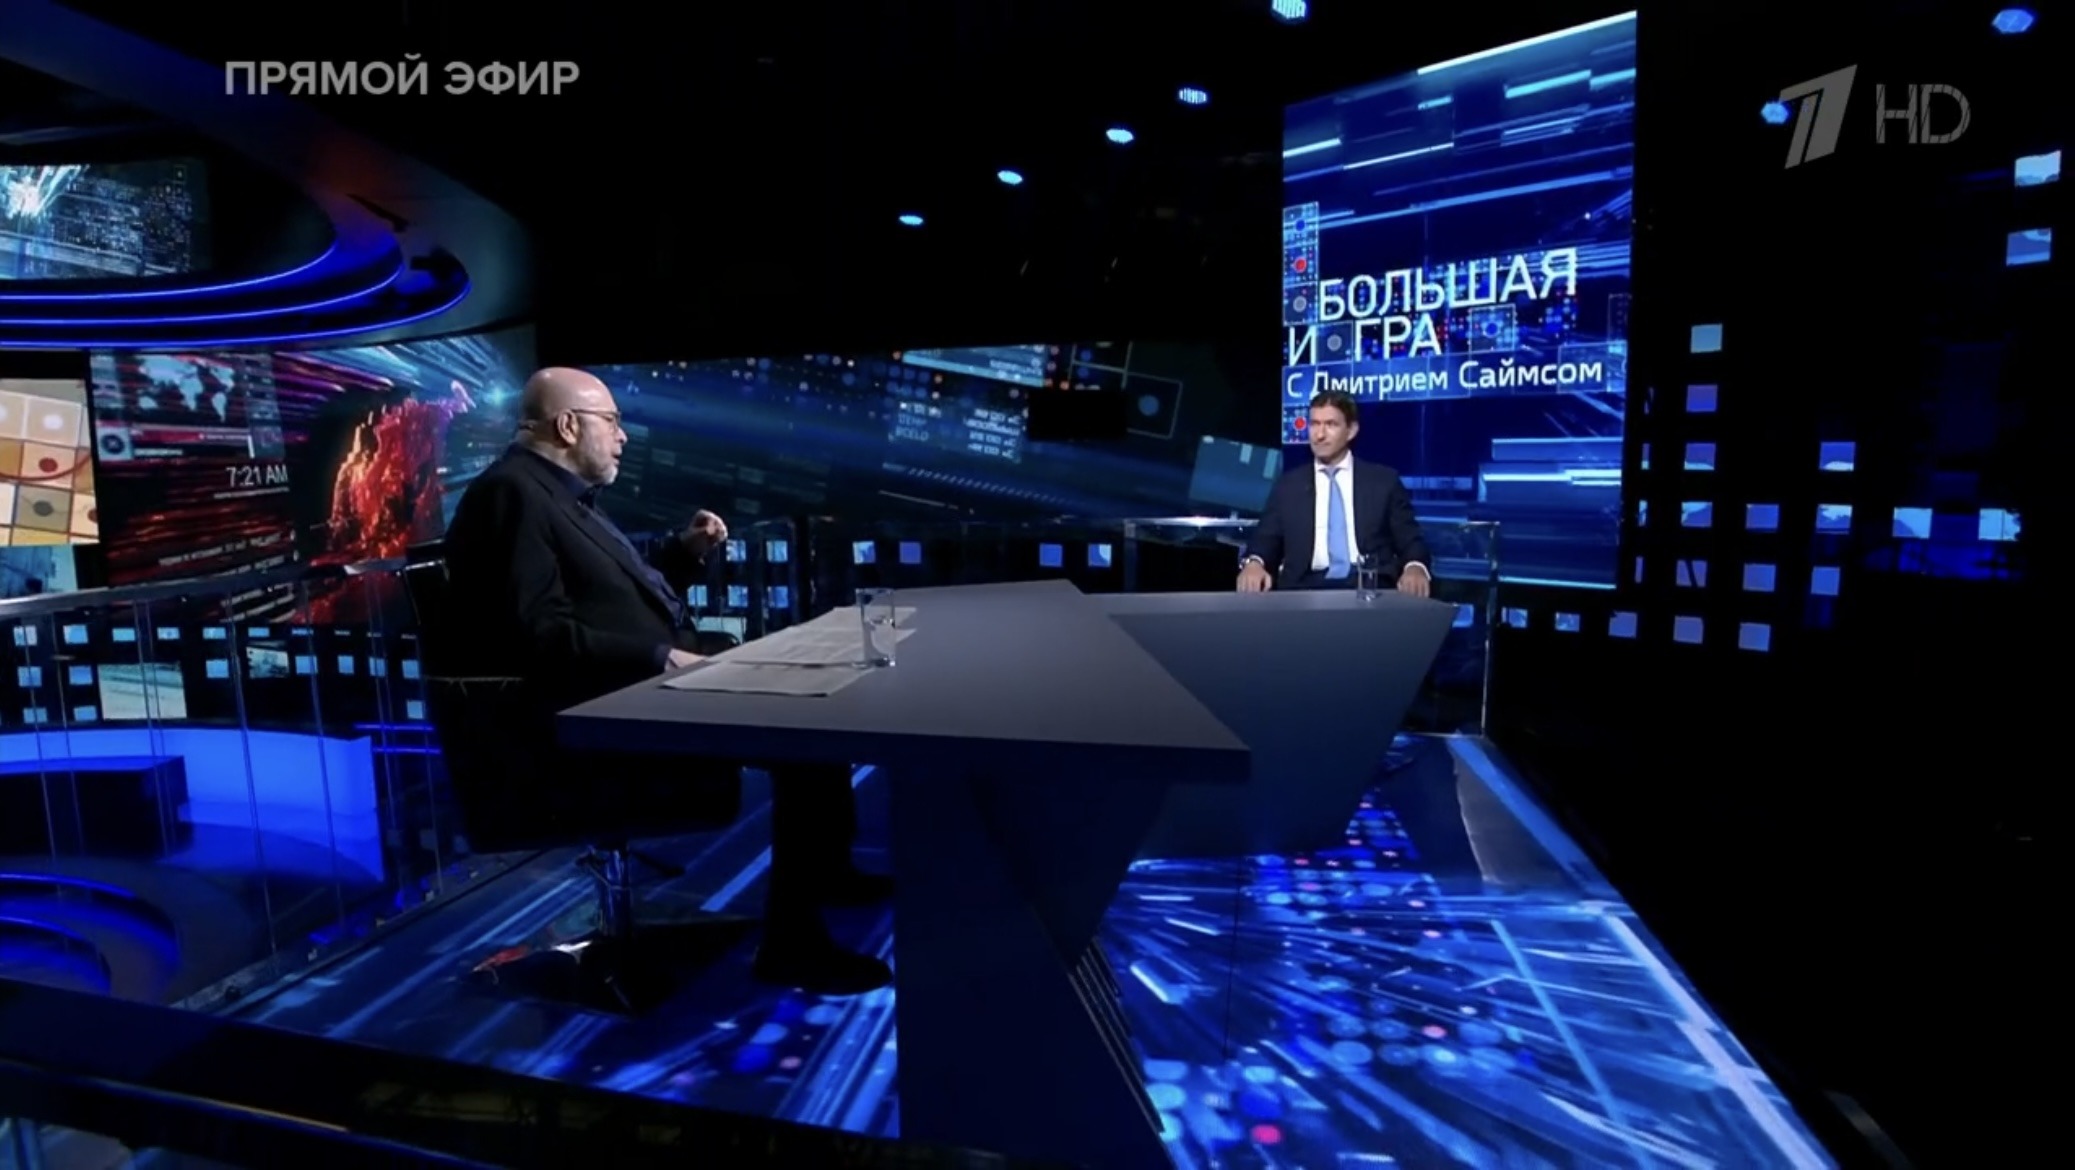 Президент НКЦ Кирилл Бабаев дал интервью Первому каналу